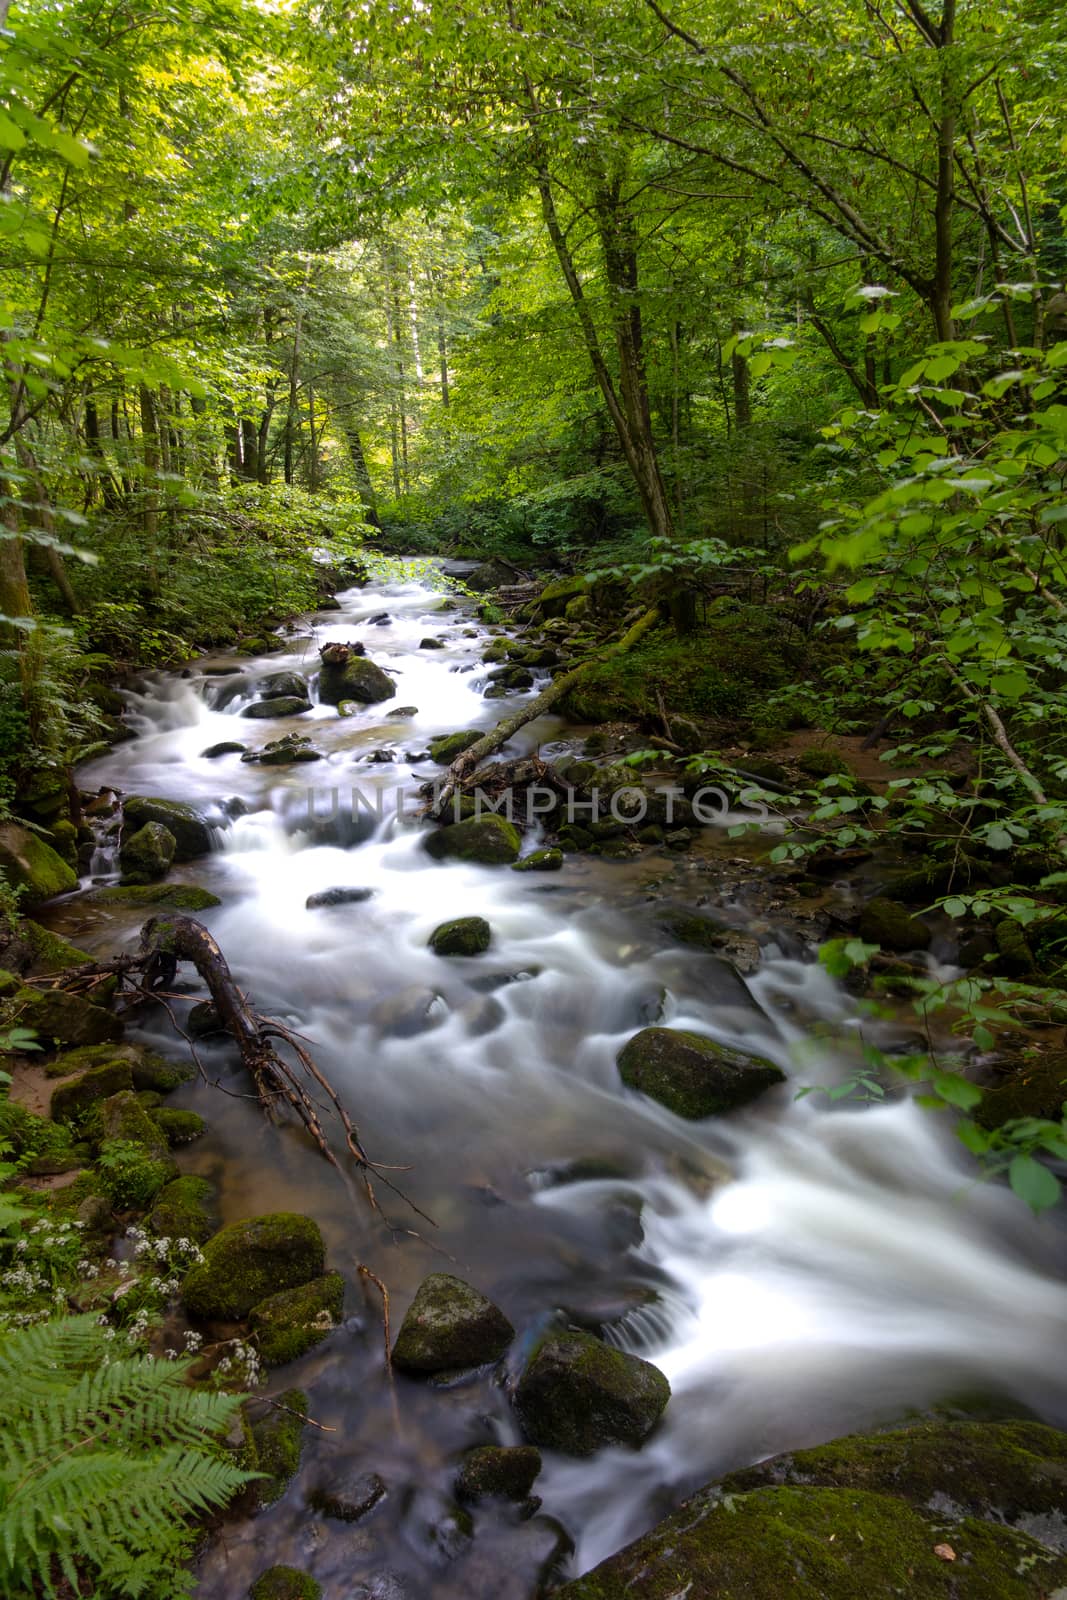 Mountain river - stream flowing through thick green forest, Bistriski Vintgar, Slovenia by asafaric